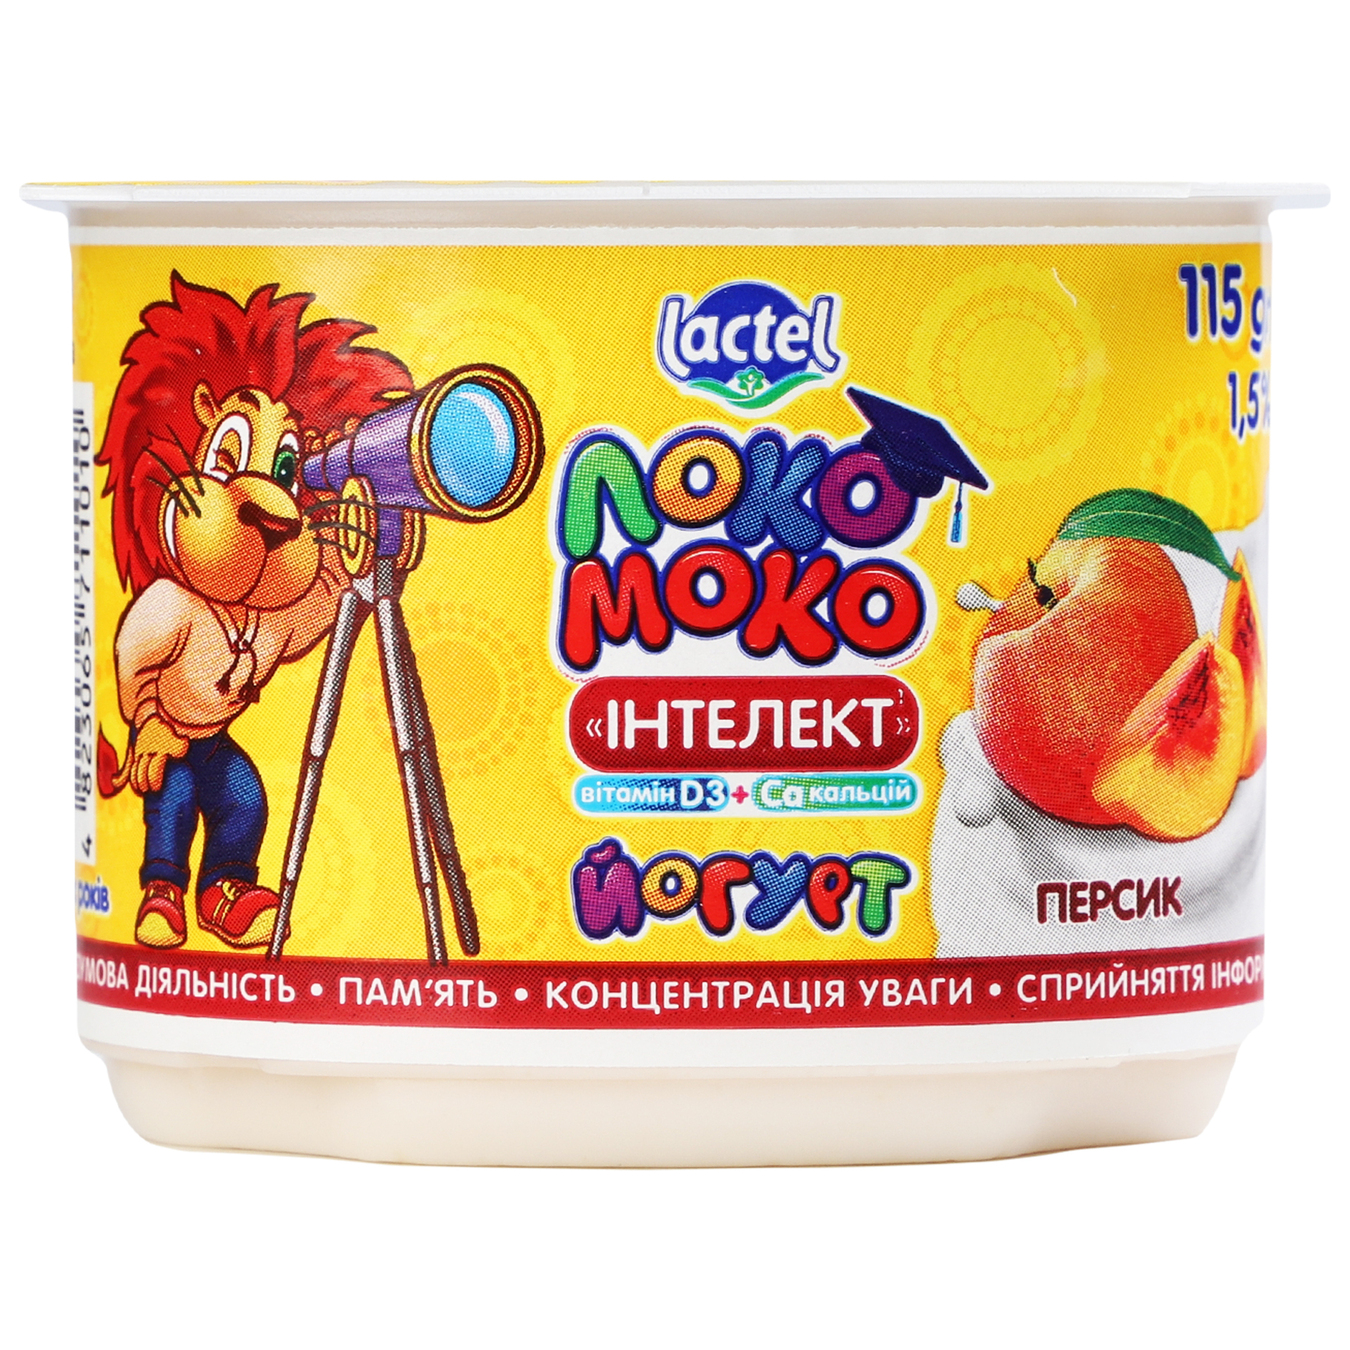 Lactel Loko Moko Peach Flavored Yogurt 1,5% 115g